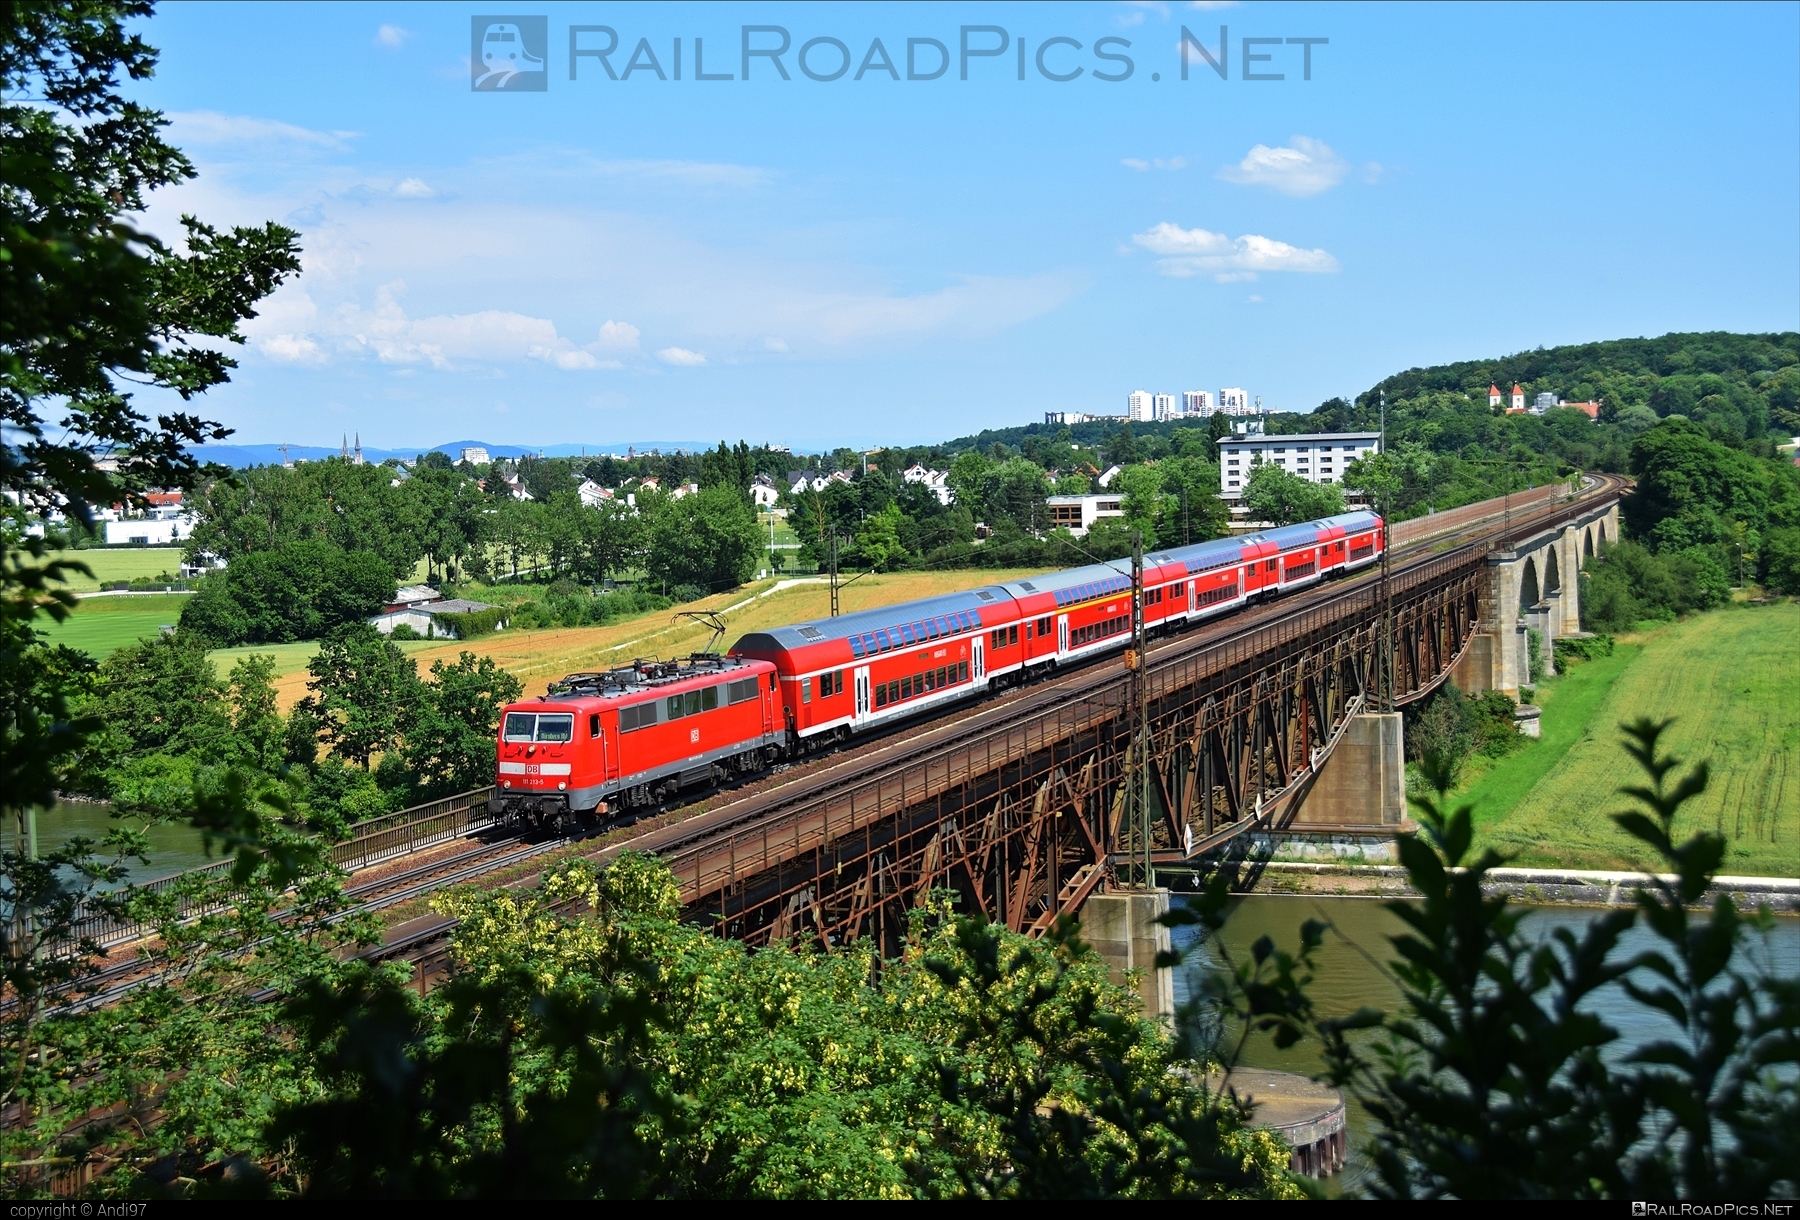 DB Class 111 - 111 213 operated by Deutsche Bahn / DB AG #bridge #db #dbClass111 #dbregio #deutschebahn